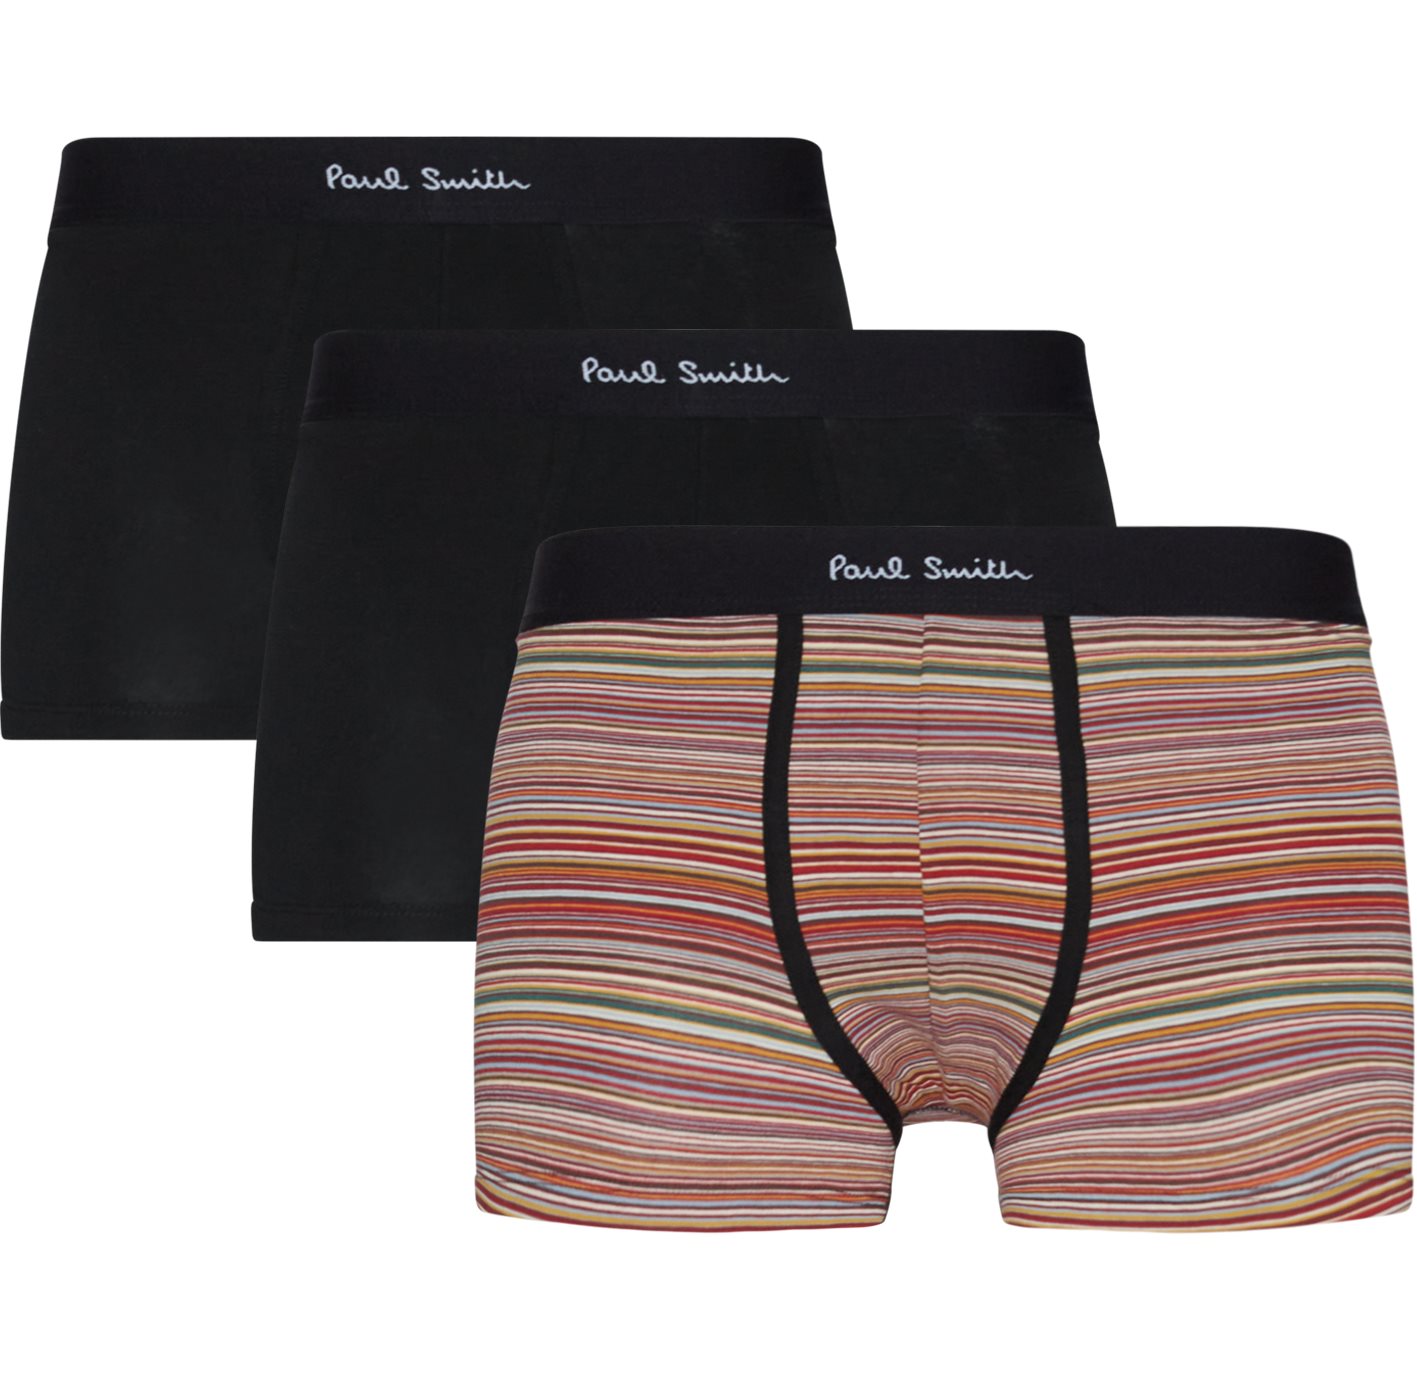 3 Pack Boxers - Underwear - Regular fit - Multi